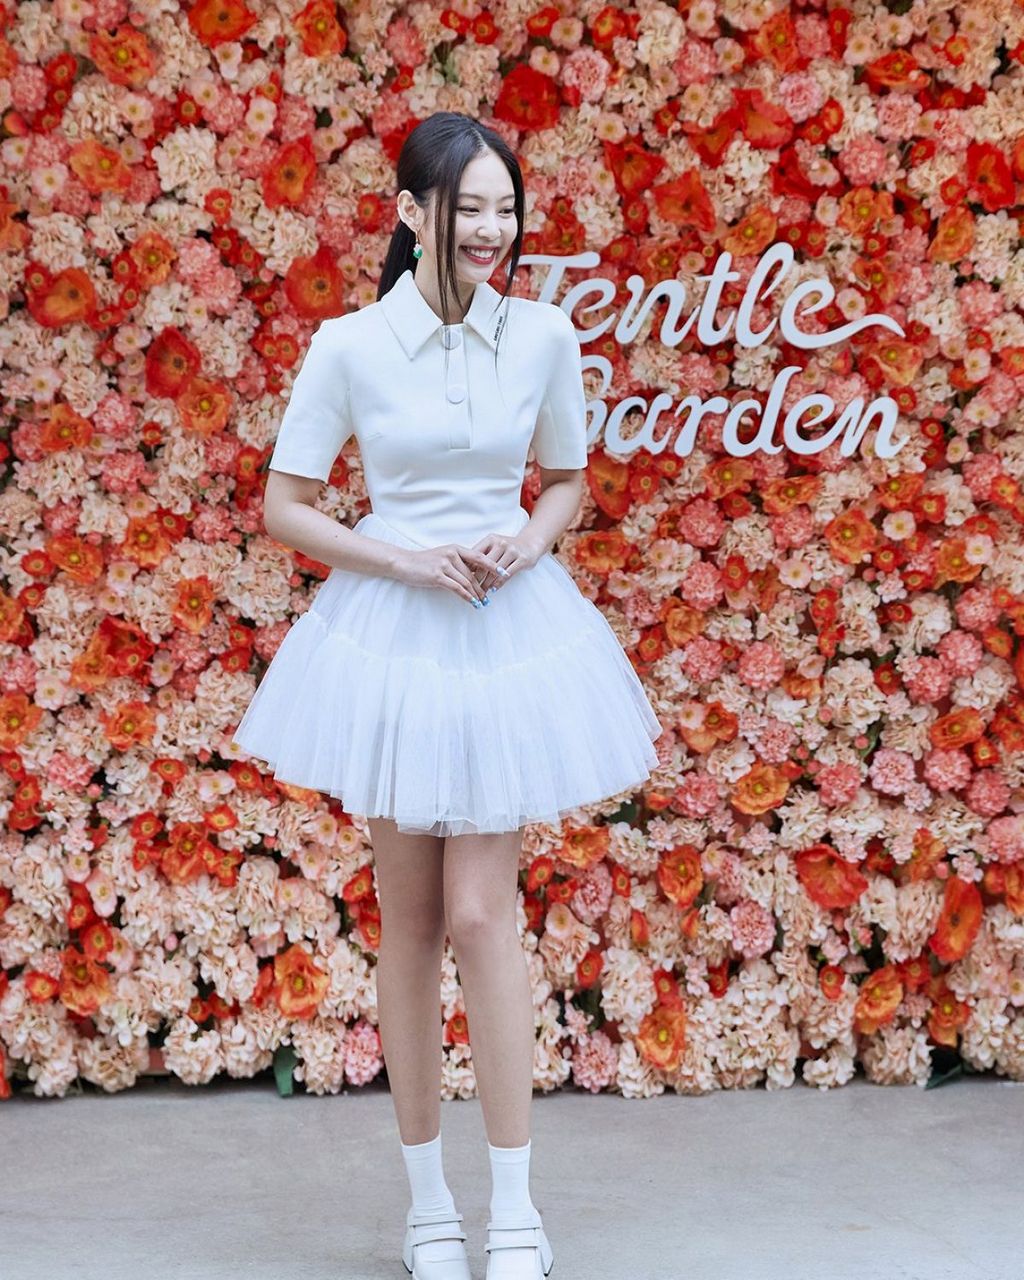 Jennie Gentle Monster S Jentle Garden Pop Up Space Event Seoul